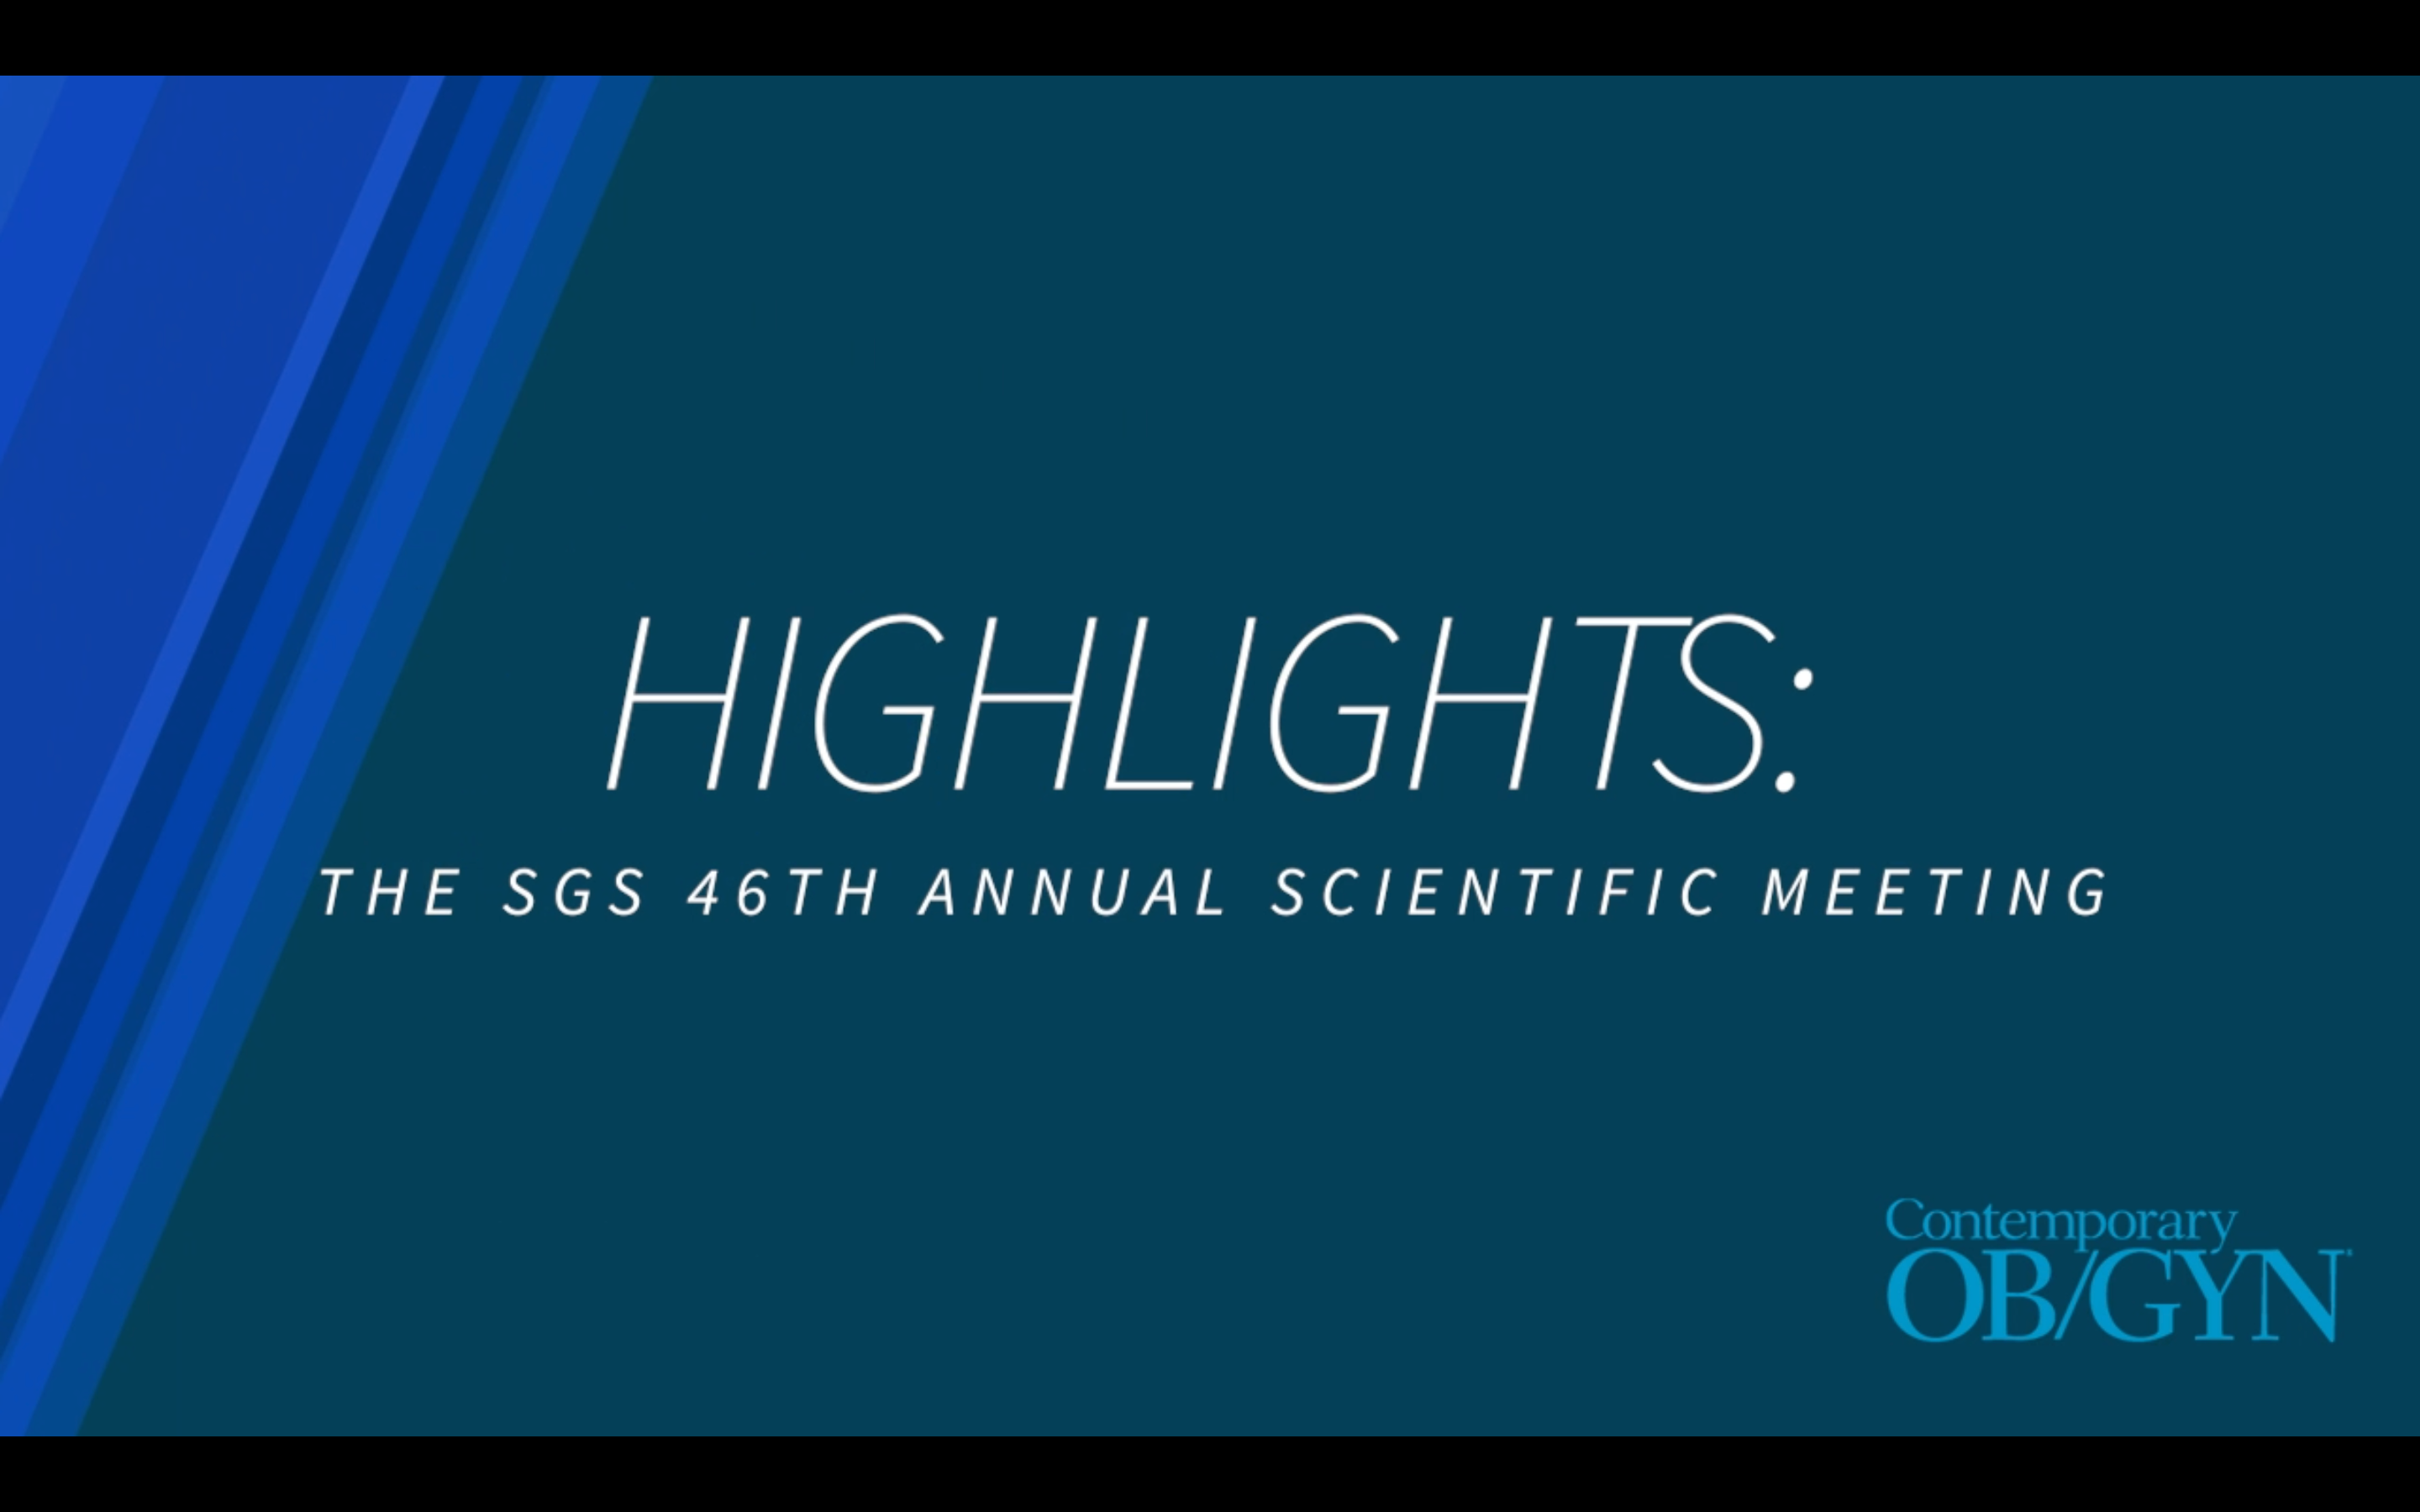 SGS 46th Annual Scientific Meeting highlights